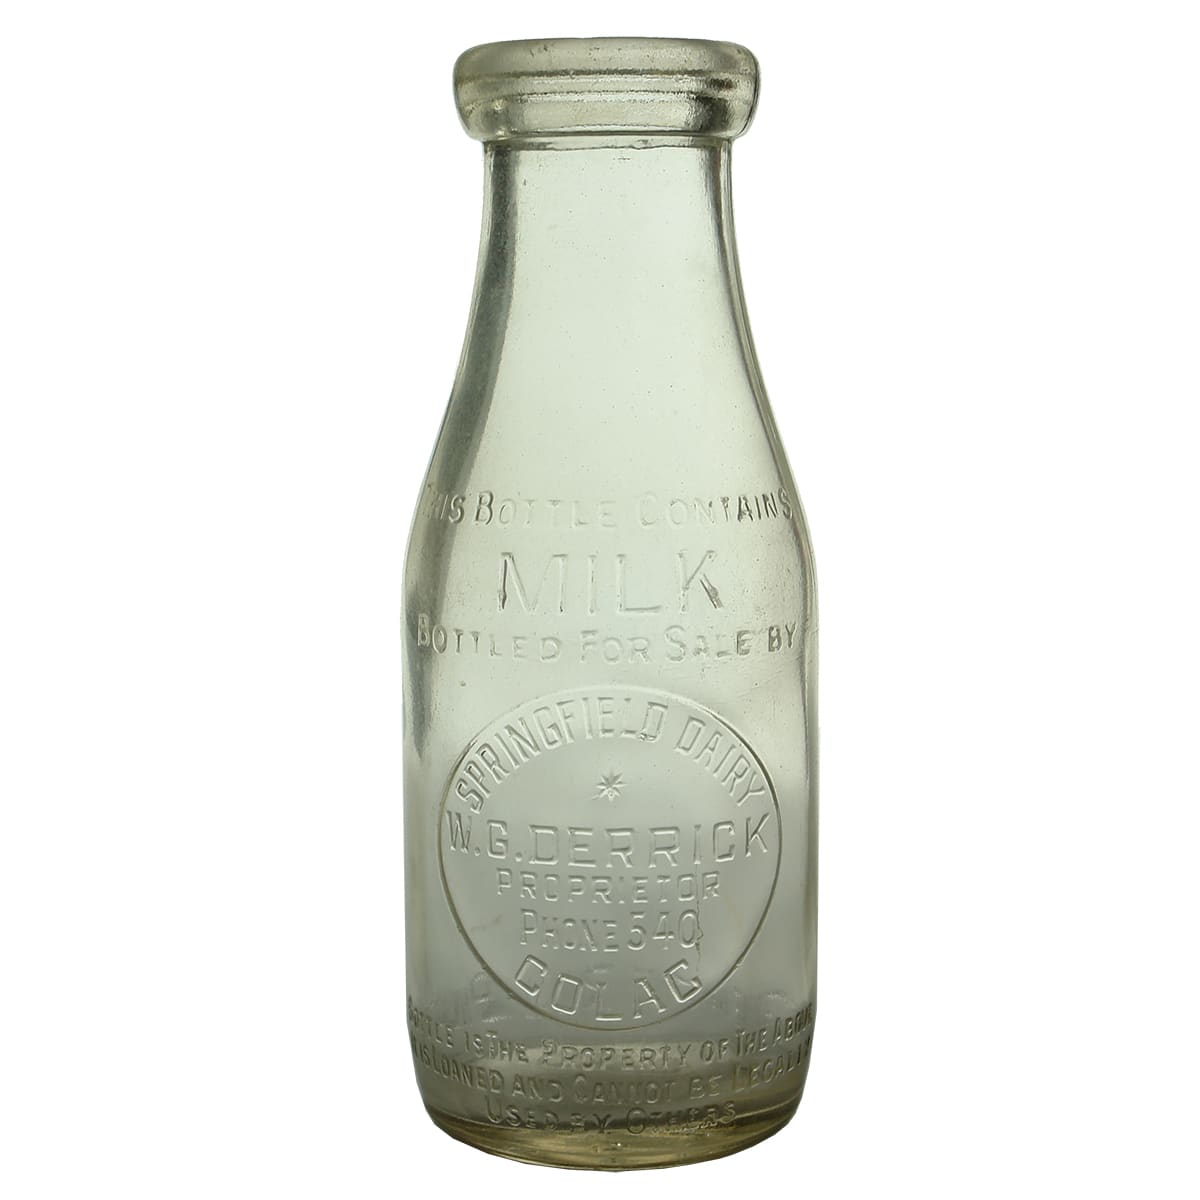 Milk. W. G. Derrick, Springfield Dairy, Colac. Wad lip. 1 Pint. (Victoria)